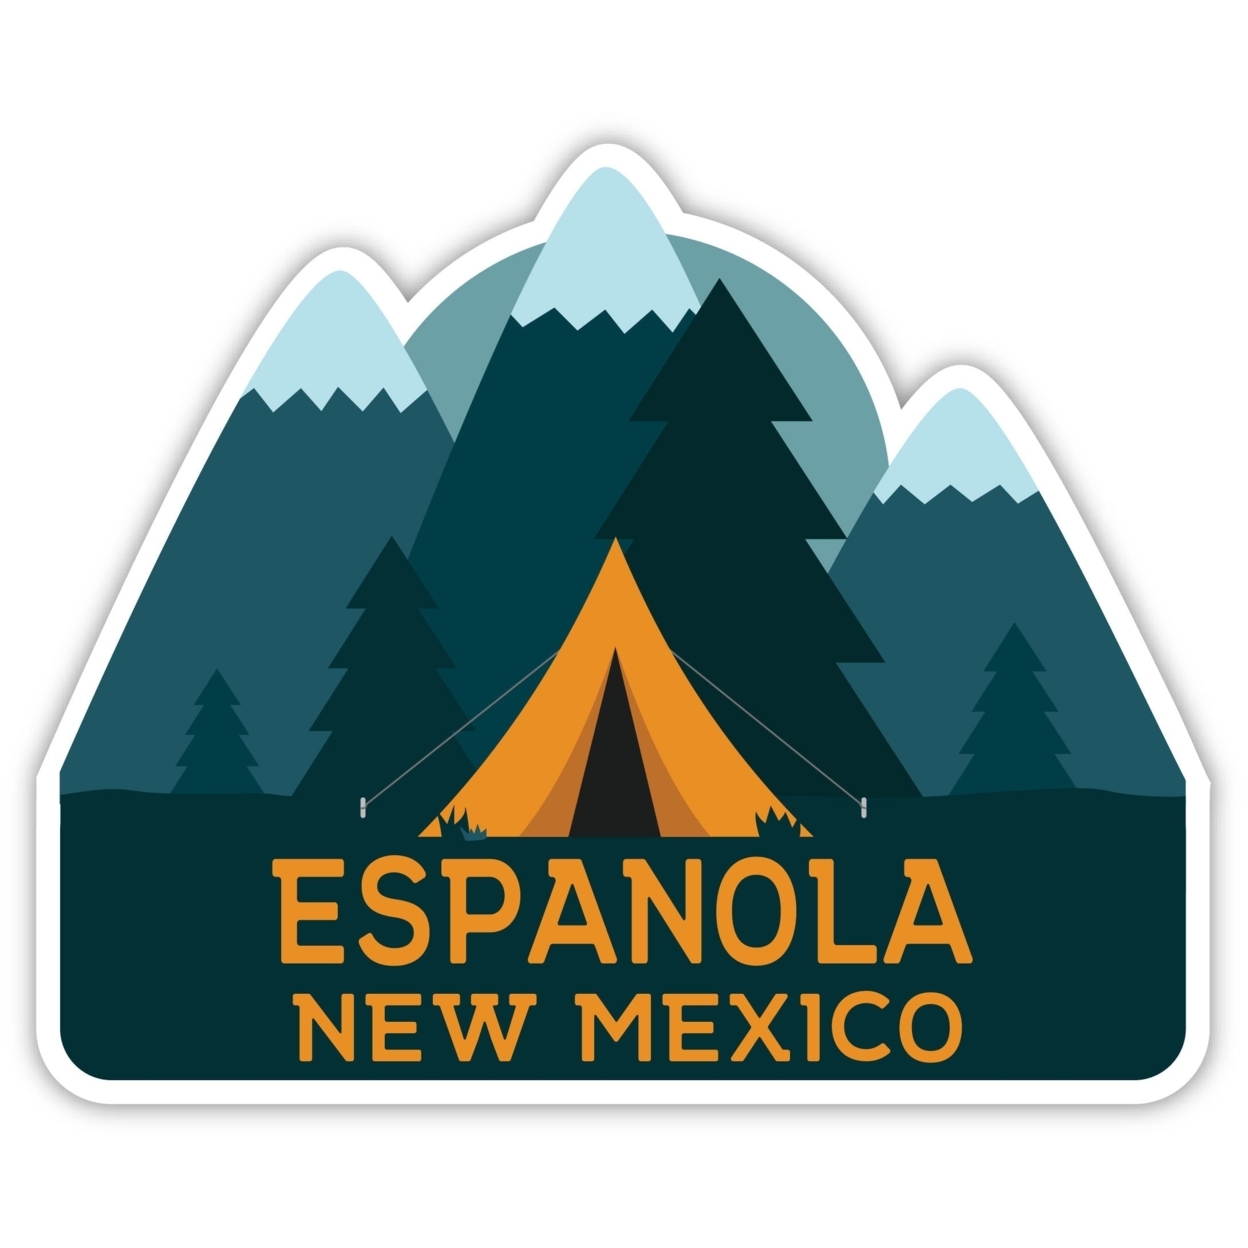 Espanola New Mexico Souvenir Decorative Stickers (Choose Theme And Size) - 4-Pack, 10-Inch, Tent